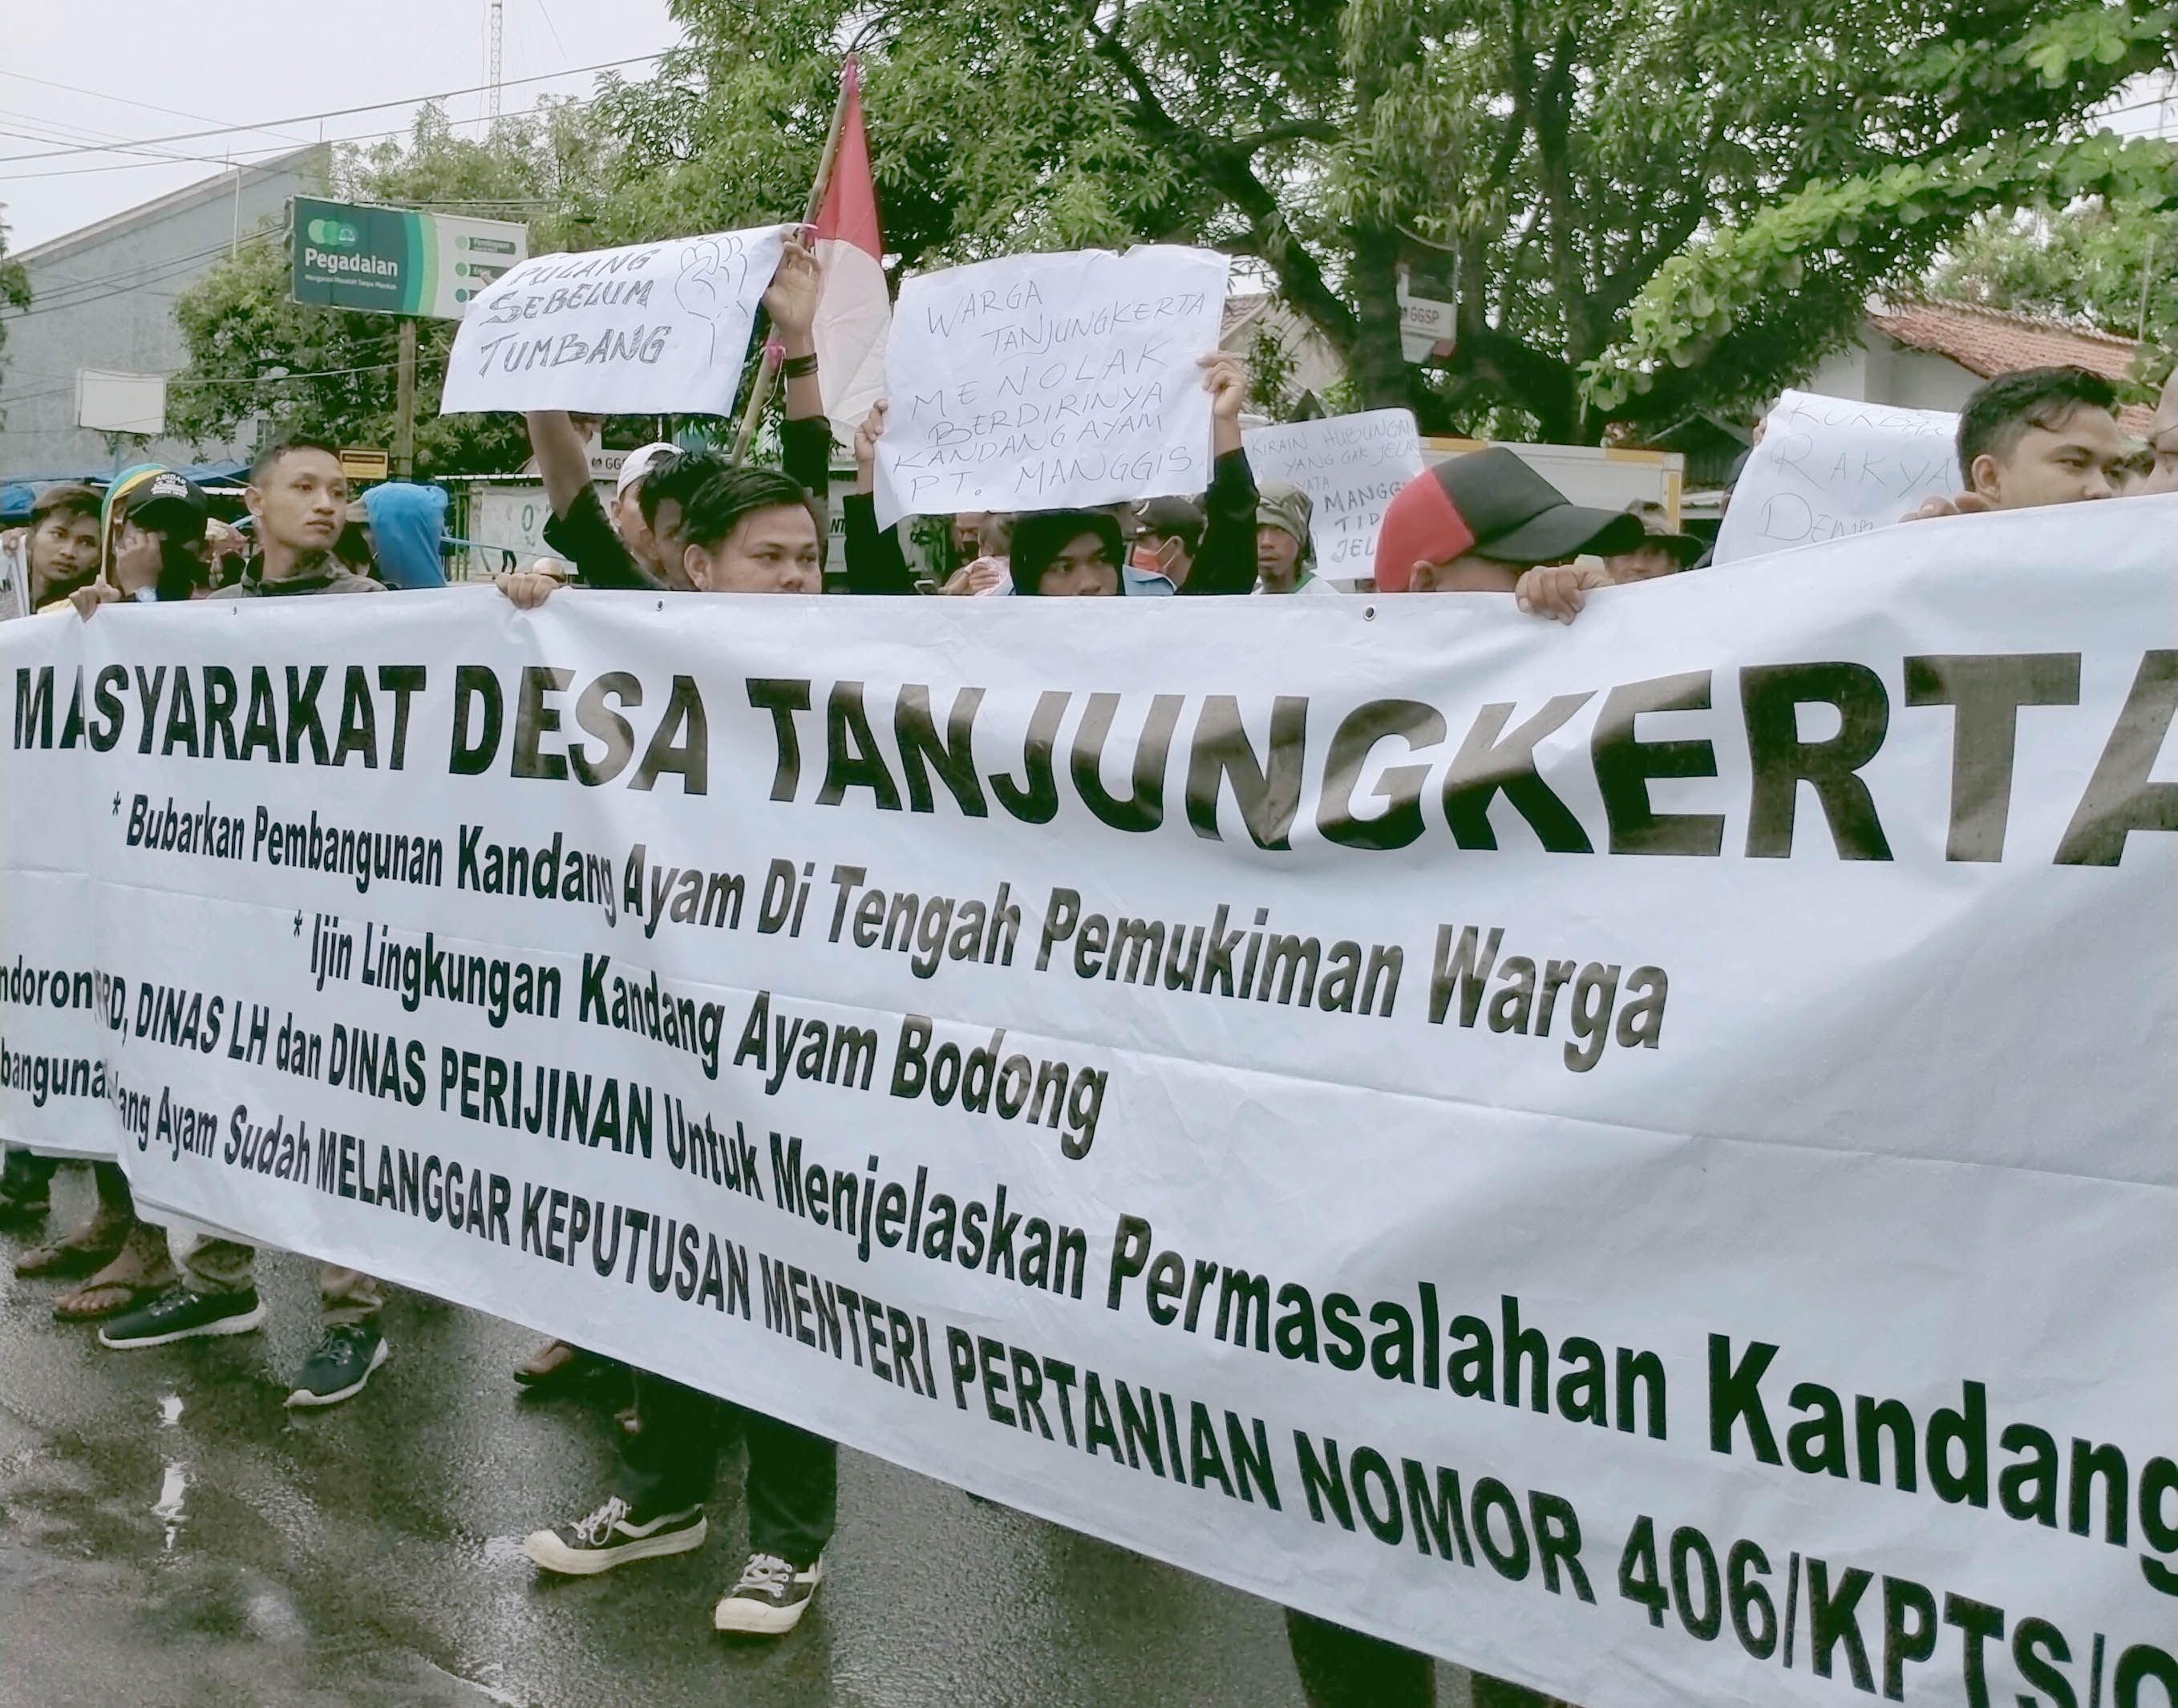 Puluhan warga mewakili masyarakat Desa Tanjungkerta Kecamatan Kroya Kabupaten Indramayu Provinsi Jawa Barat berunjuk rasa memprotes operasinal peternakan ayam.*/HERI SUTARMA